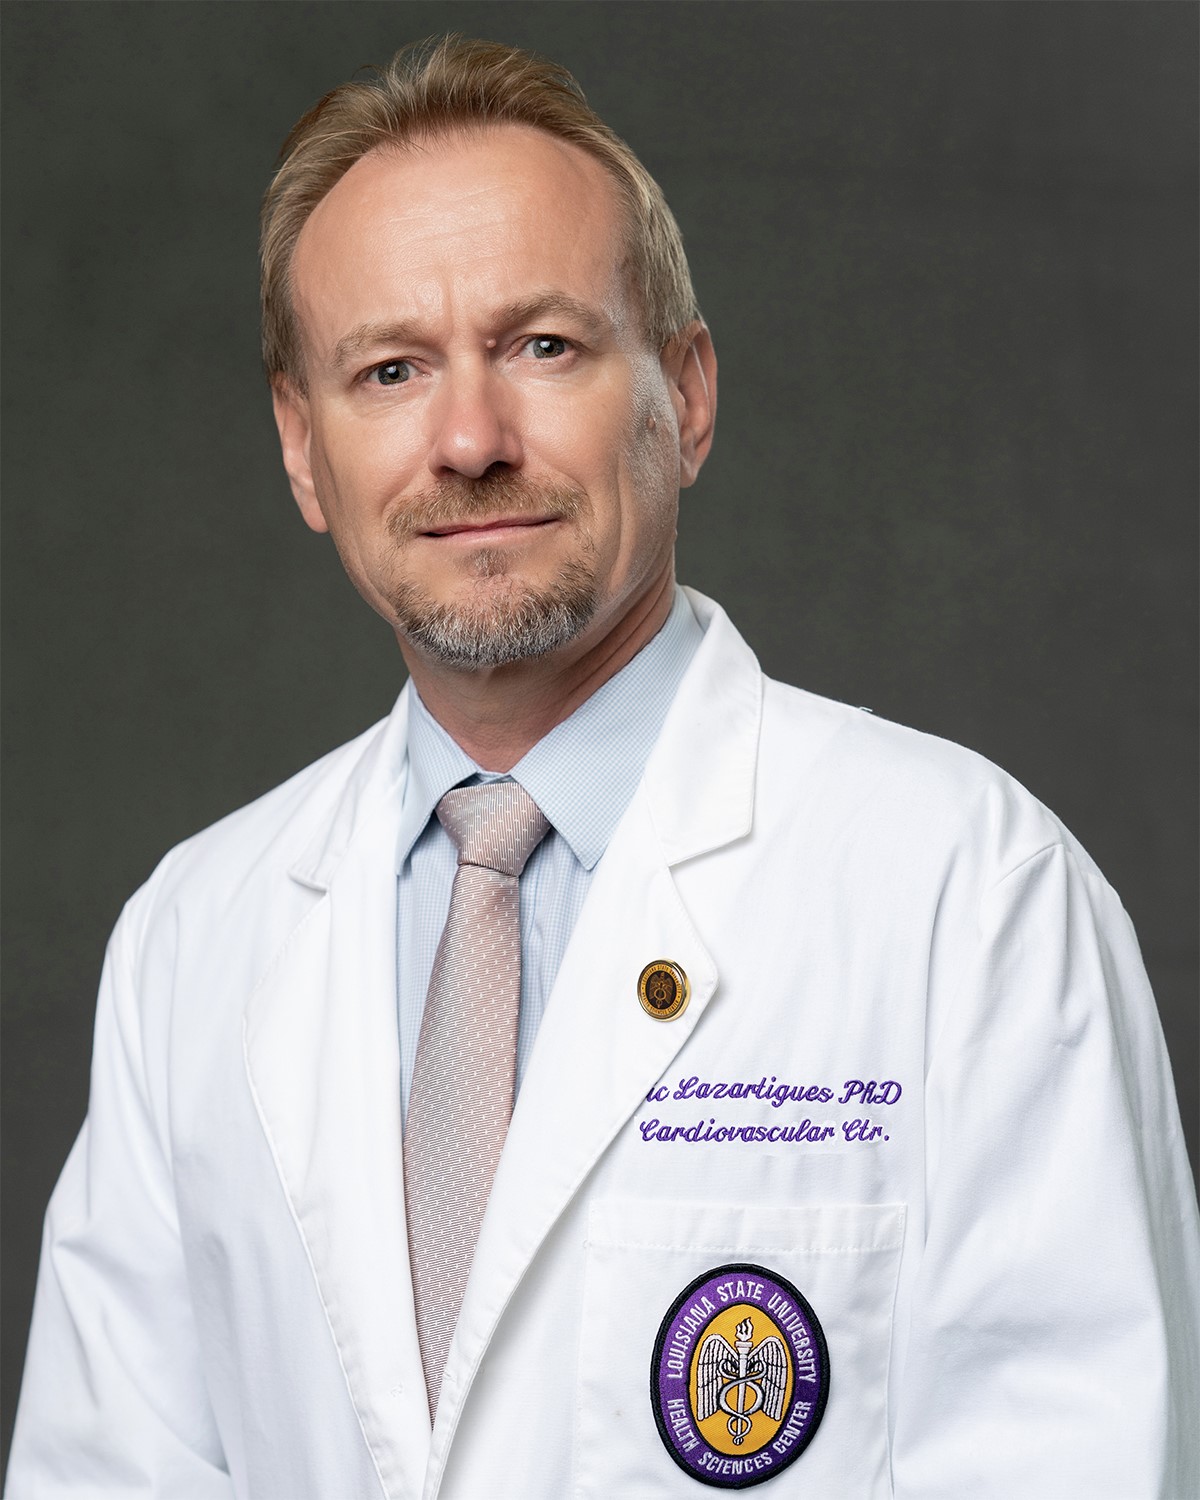 Image of Dr. Lazartigues